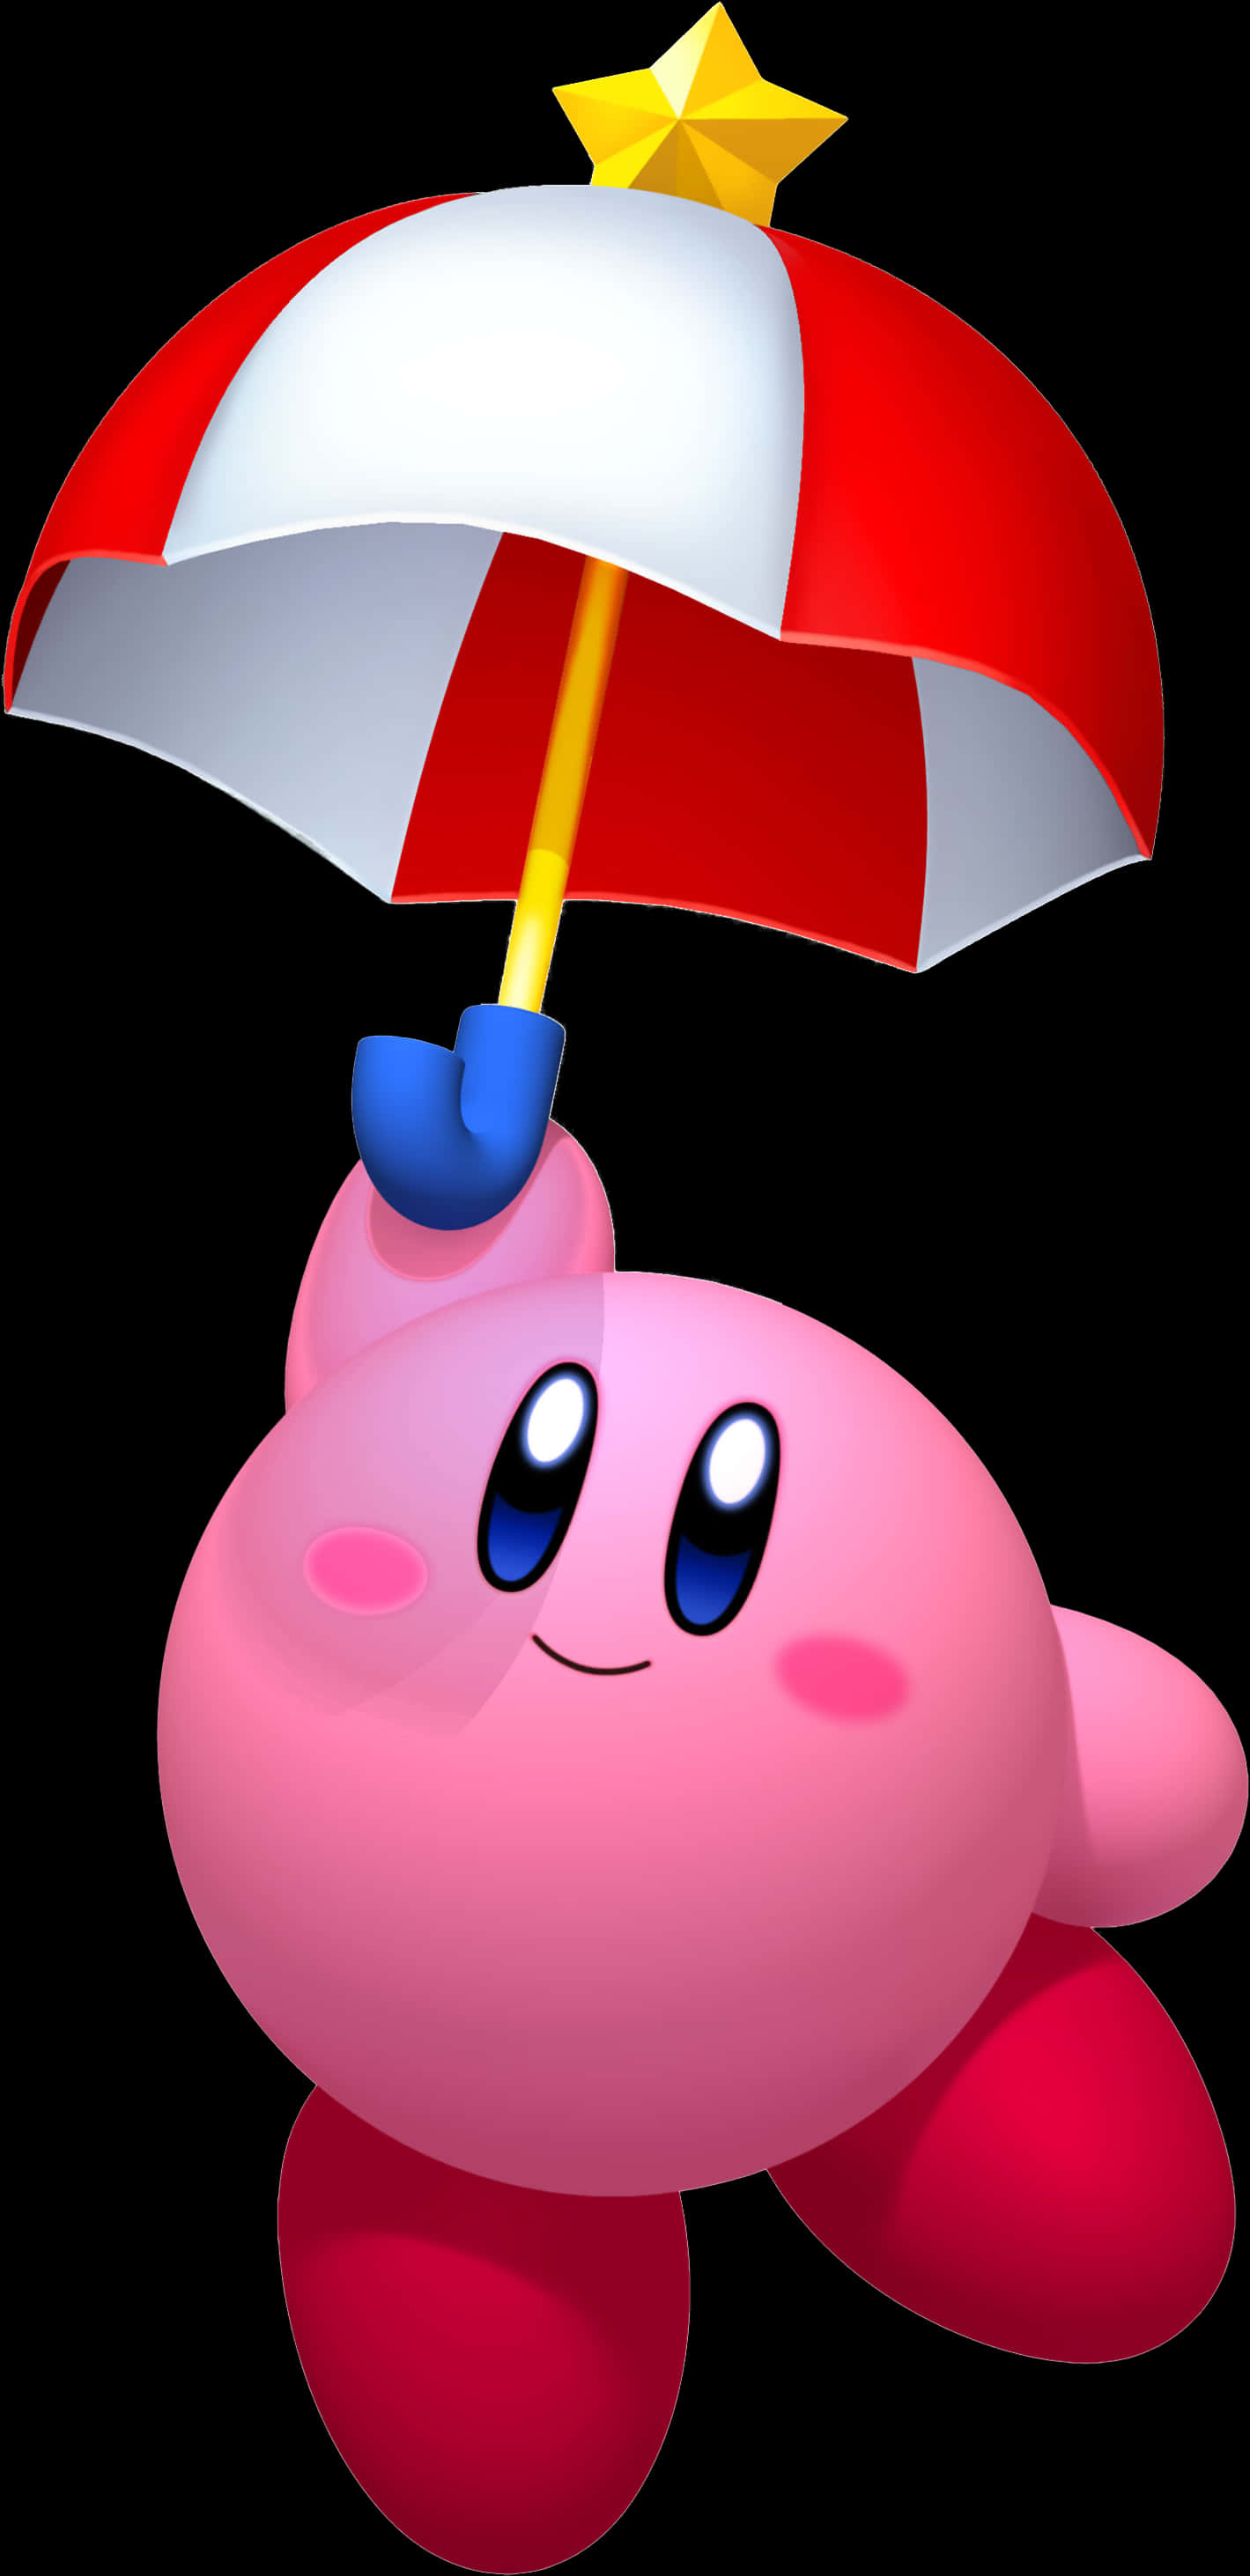 A Cartoon Character Holding An Umbrella PNG